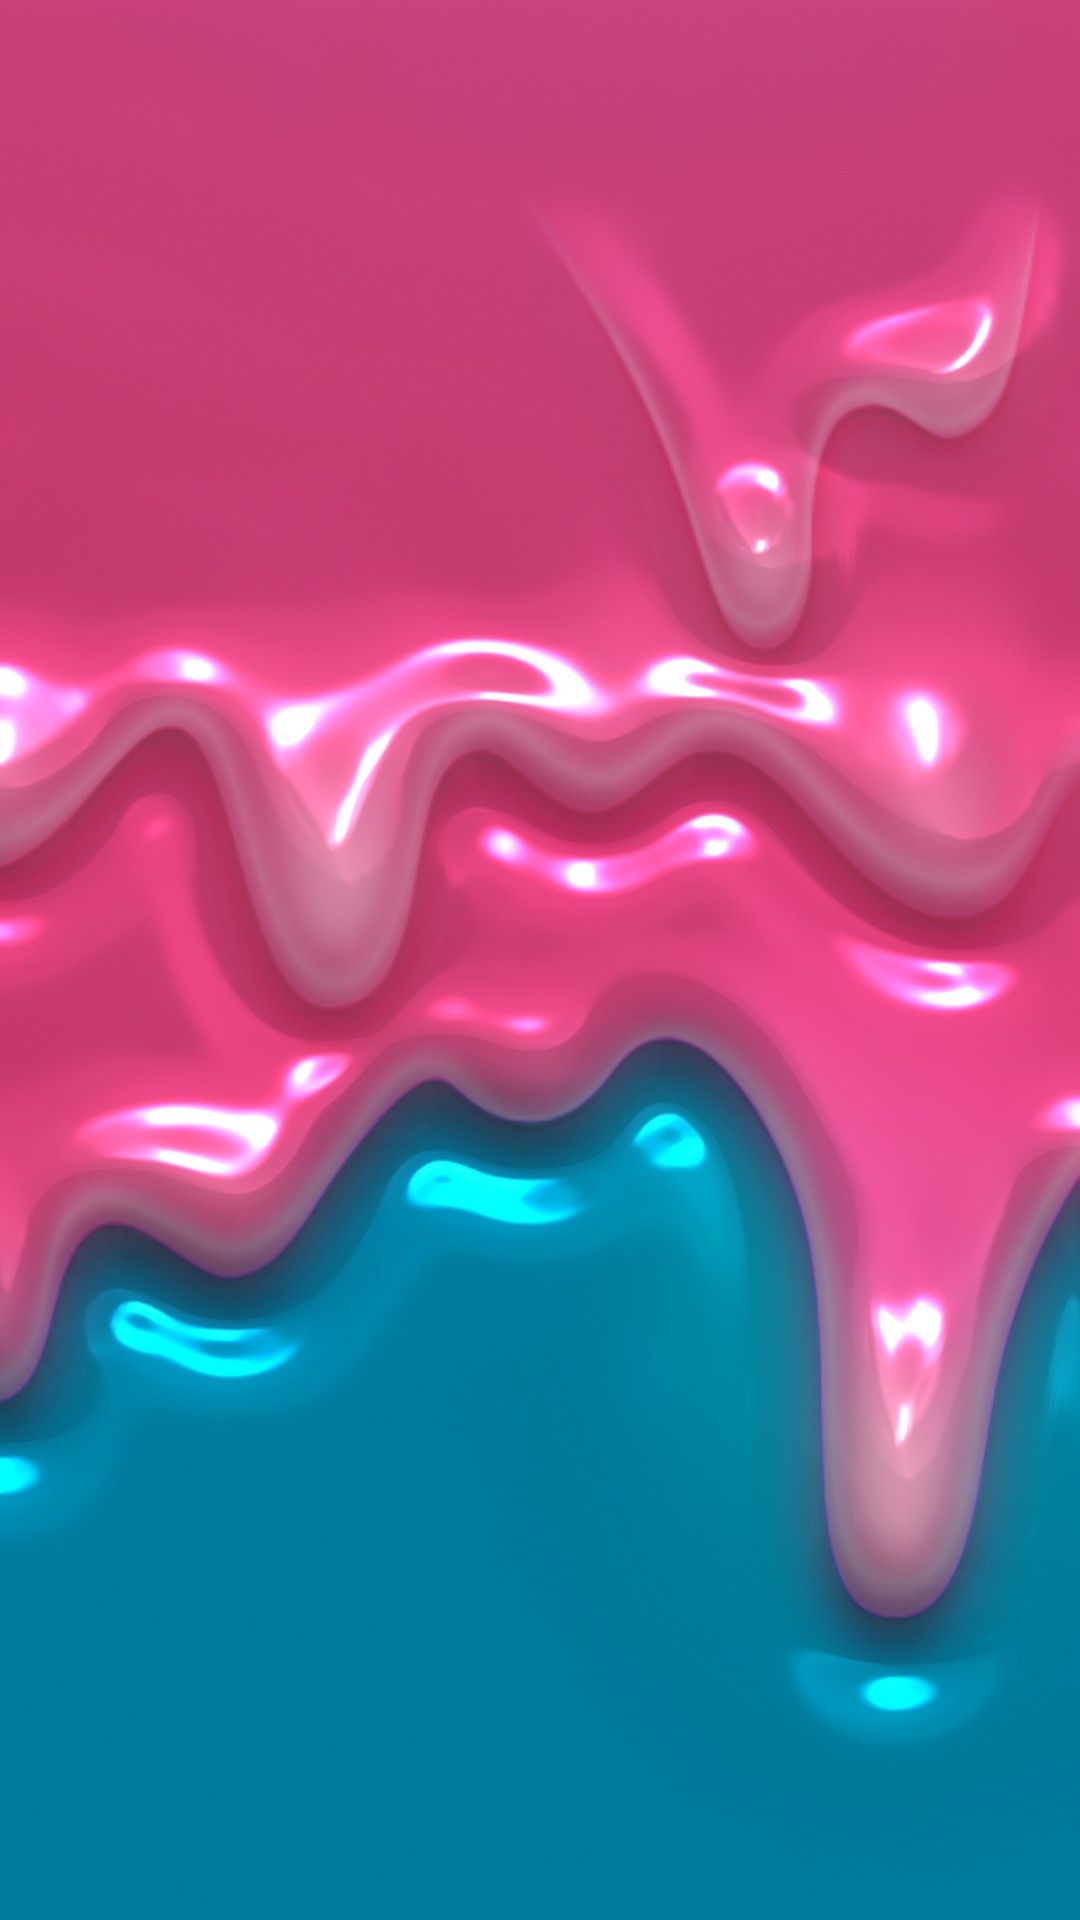 iPhone X Pink Liquid Wallpaper Cute